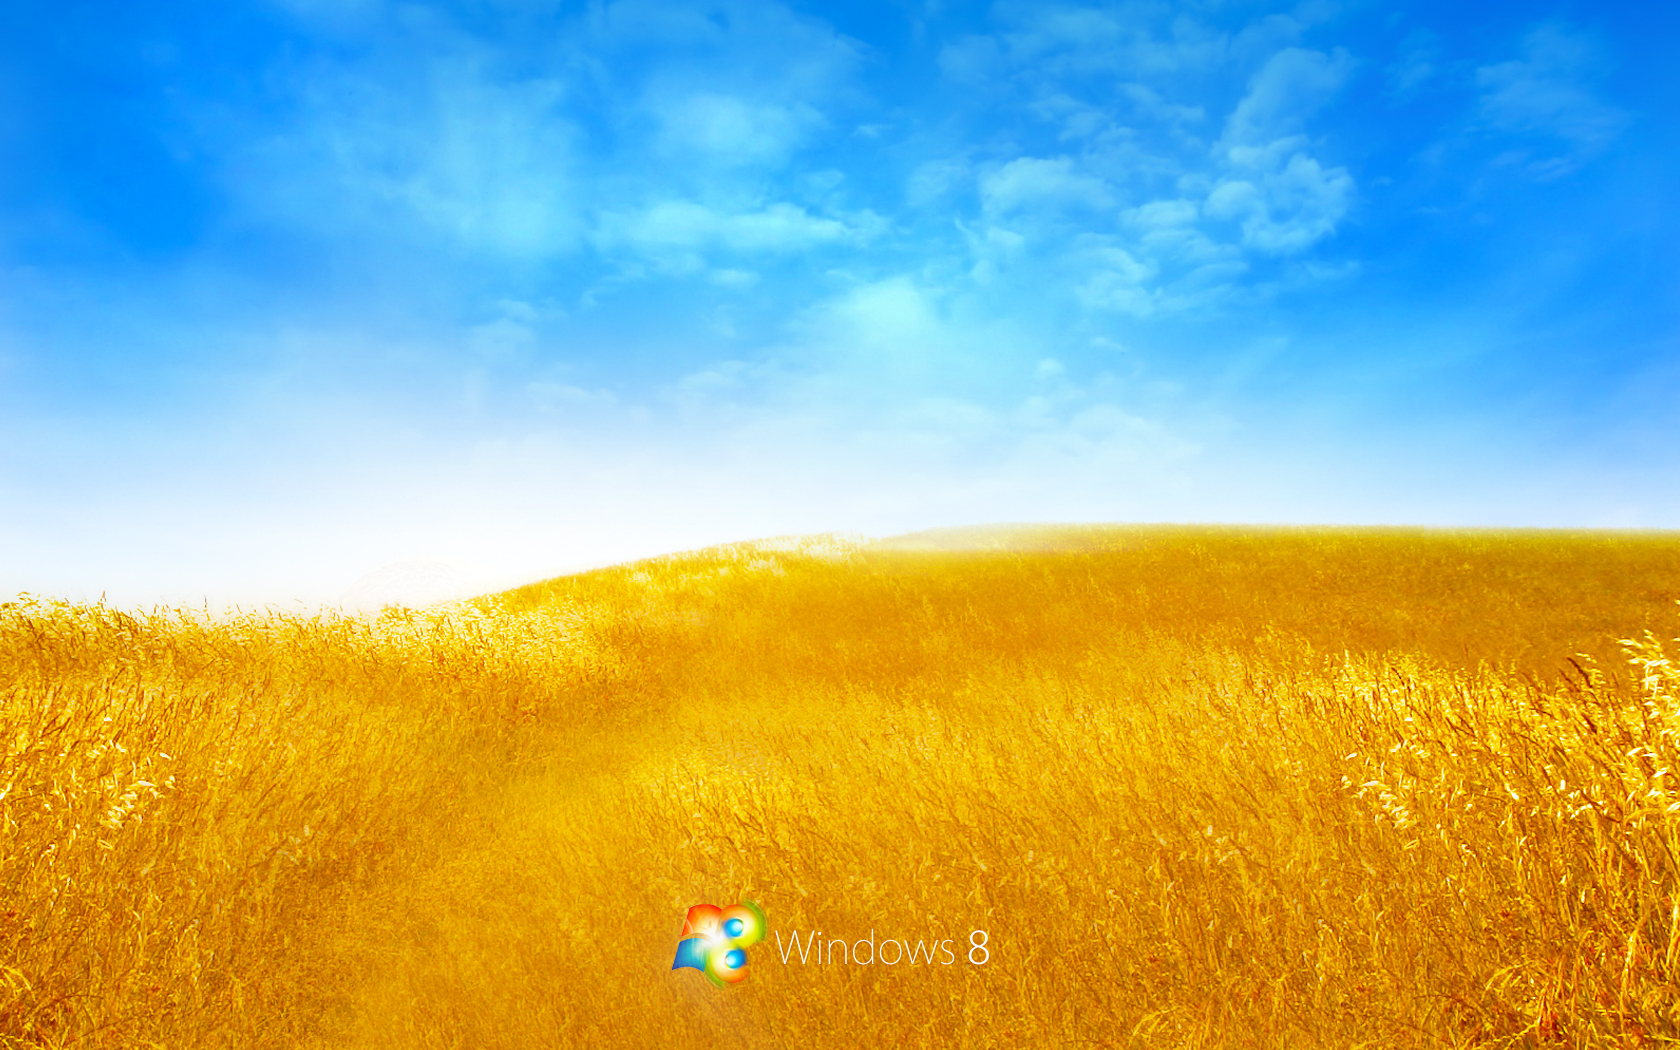 windows 8 wallpaper hd 1 Download Windows 8 Wallpapers HD